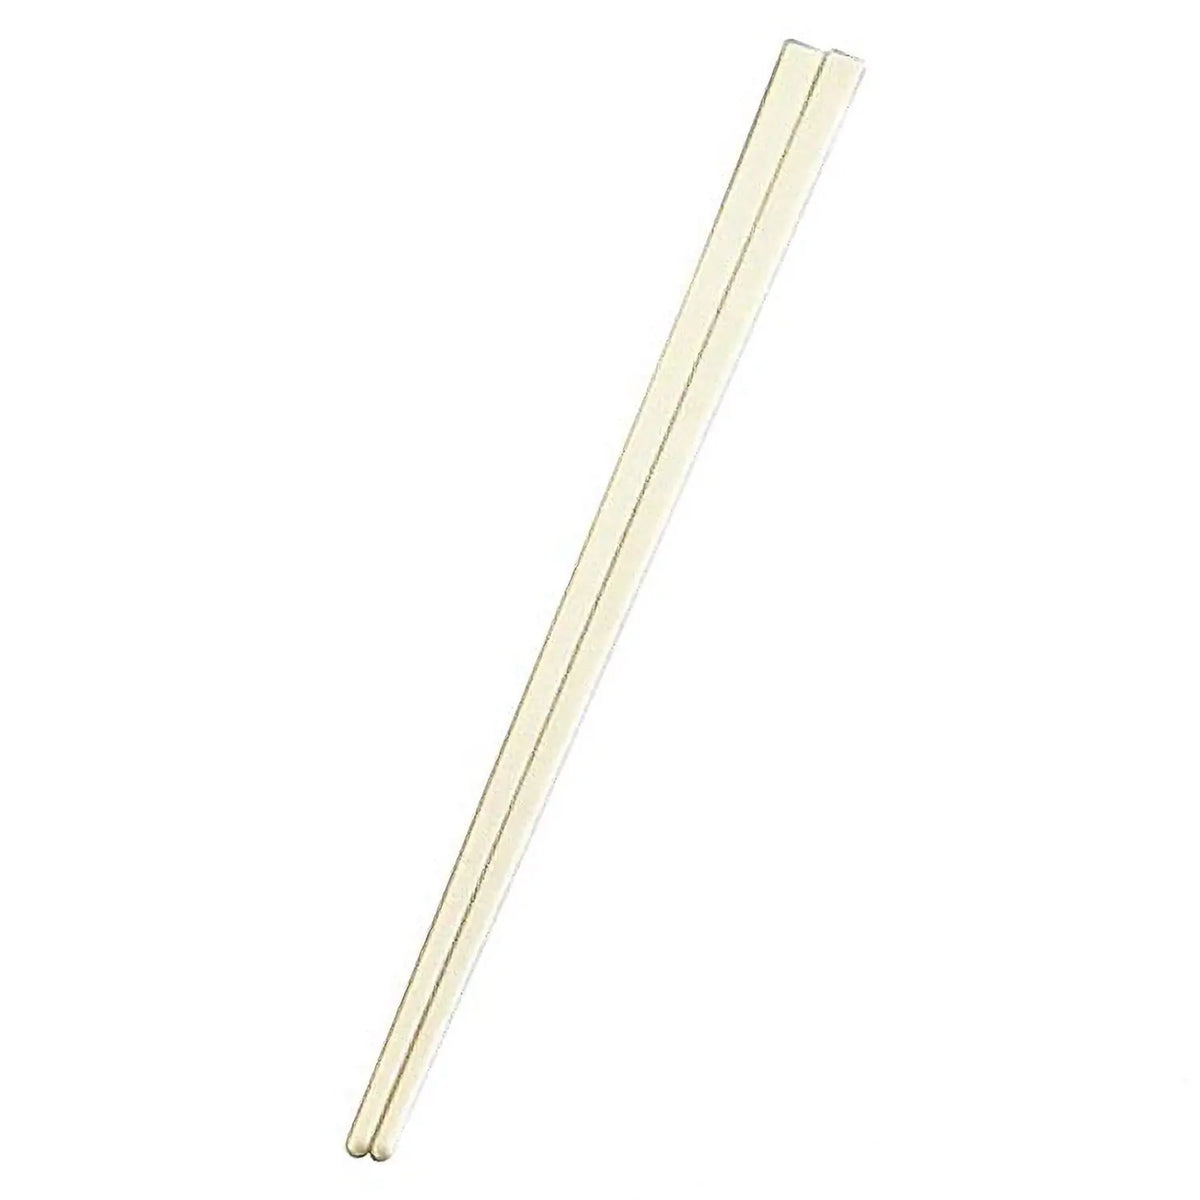 EBM PET Resin Angled-Cut Recycled Chopsticks 24cm